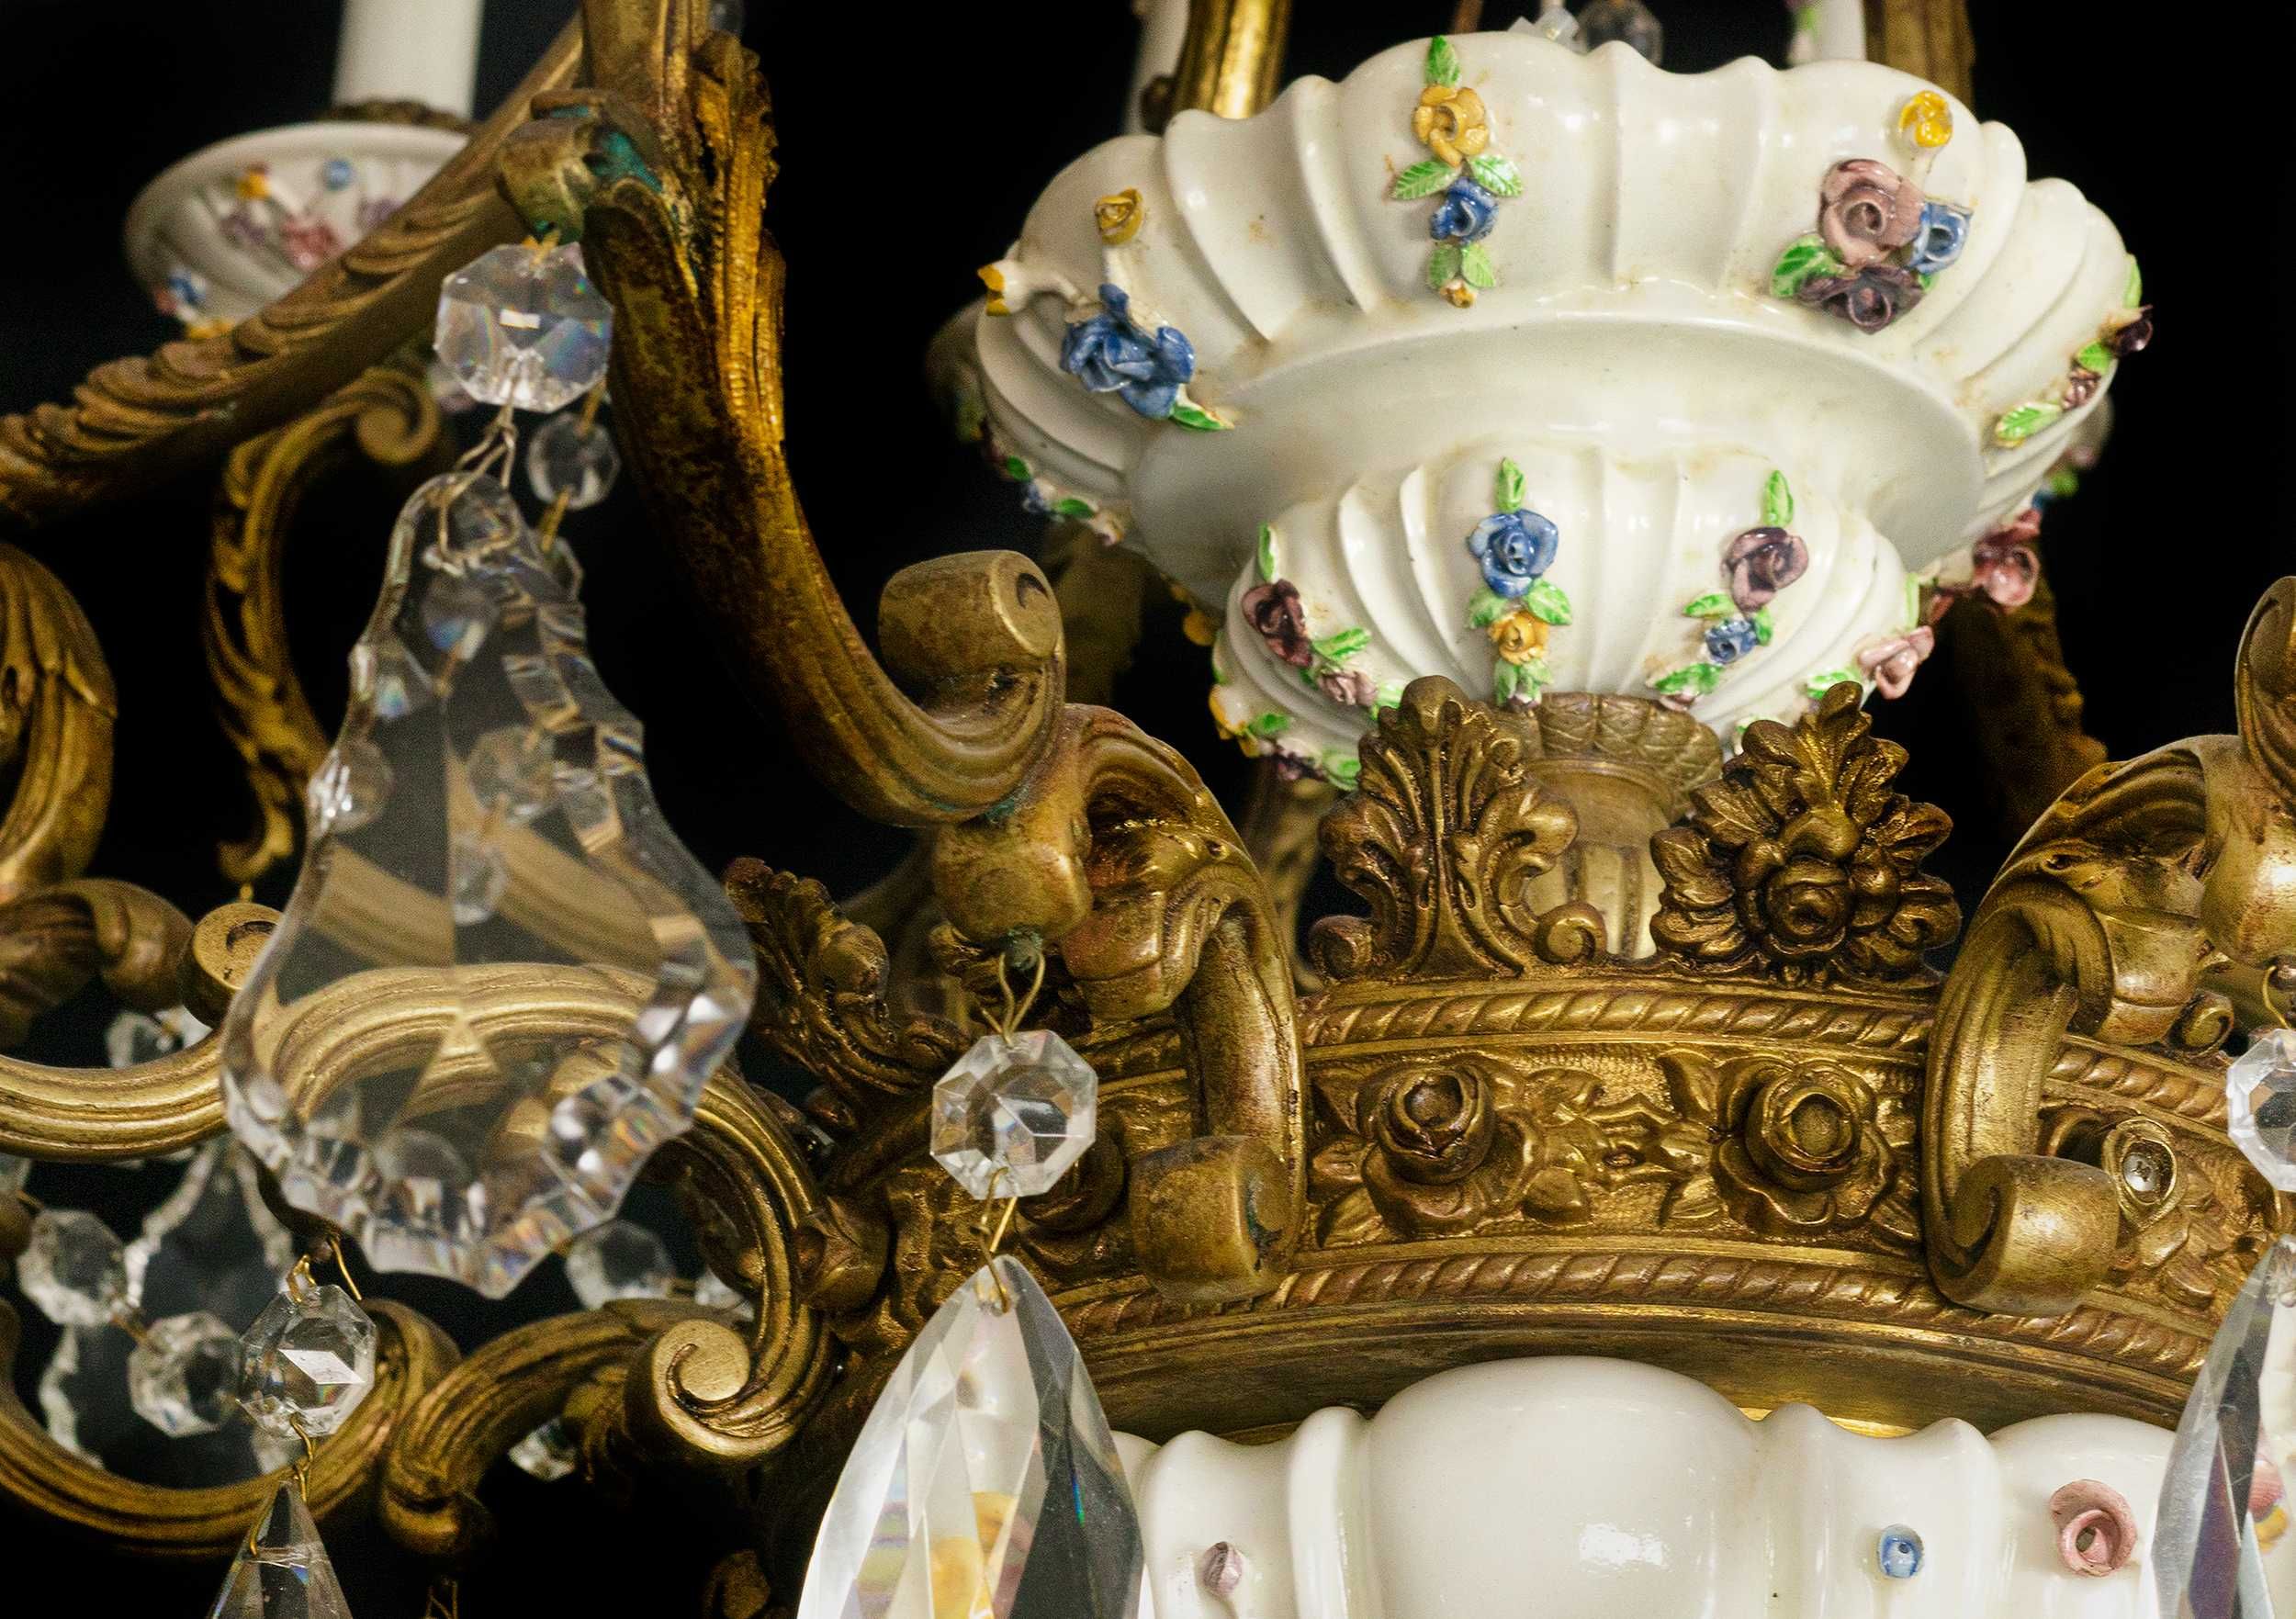 Candeeiro lustre bronze cristal porcelana Meissen | século XIX